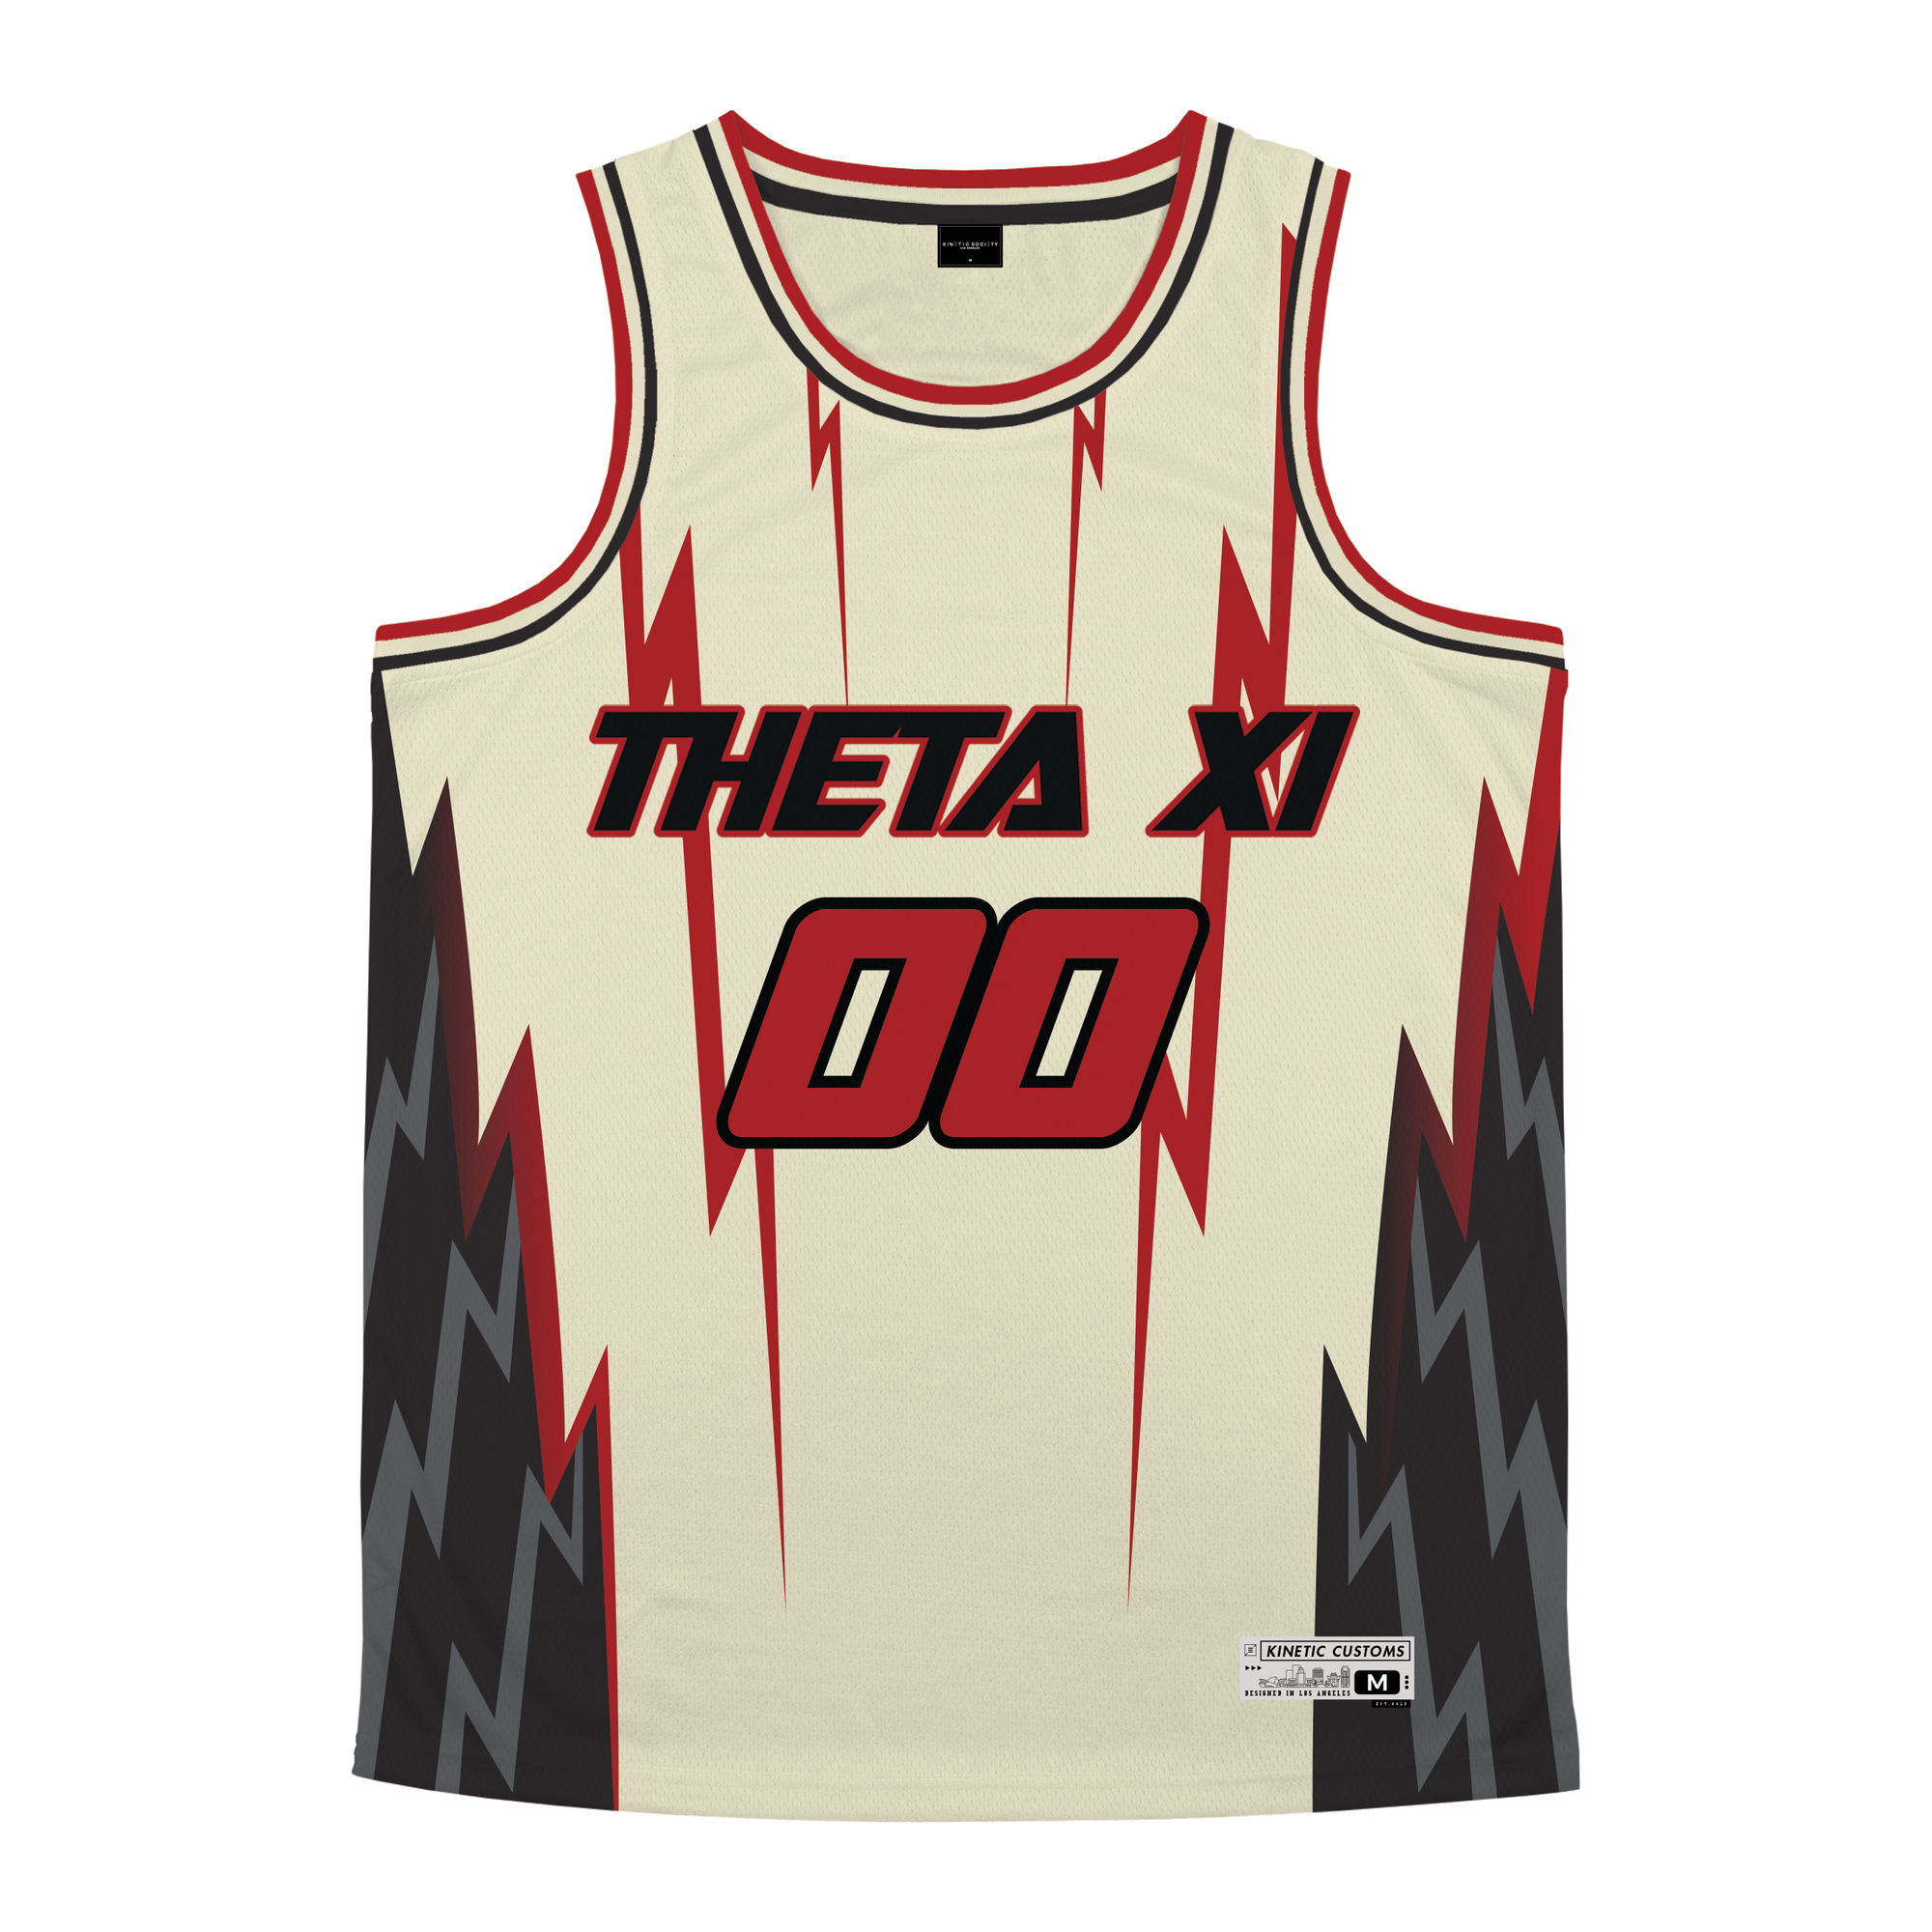 Theta Xi - Rapture Basketball Jersey